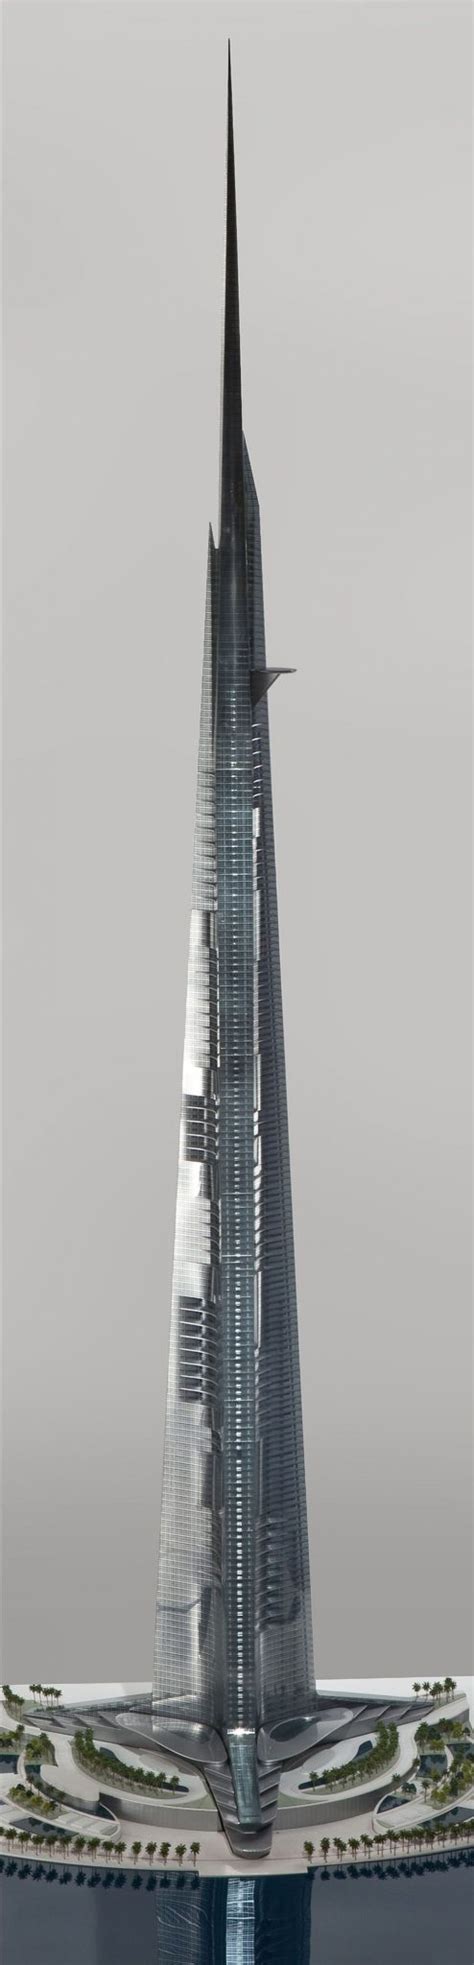 Kingdom Tower Worlds Tallest Skyscraper In Jeddah Heavensgraphix